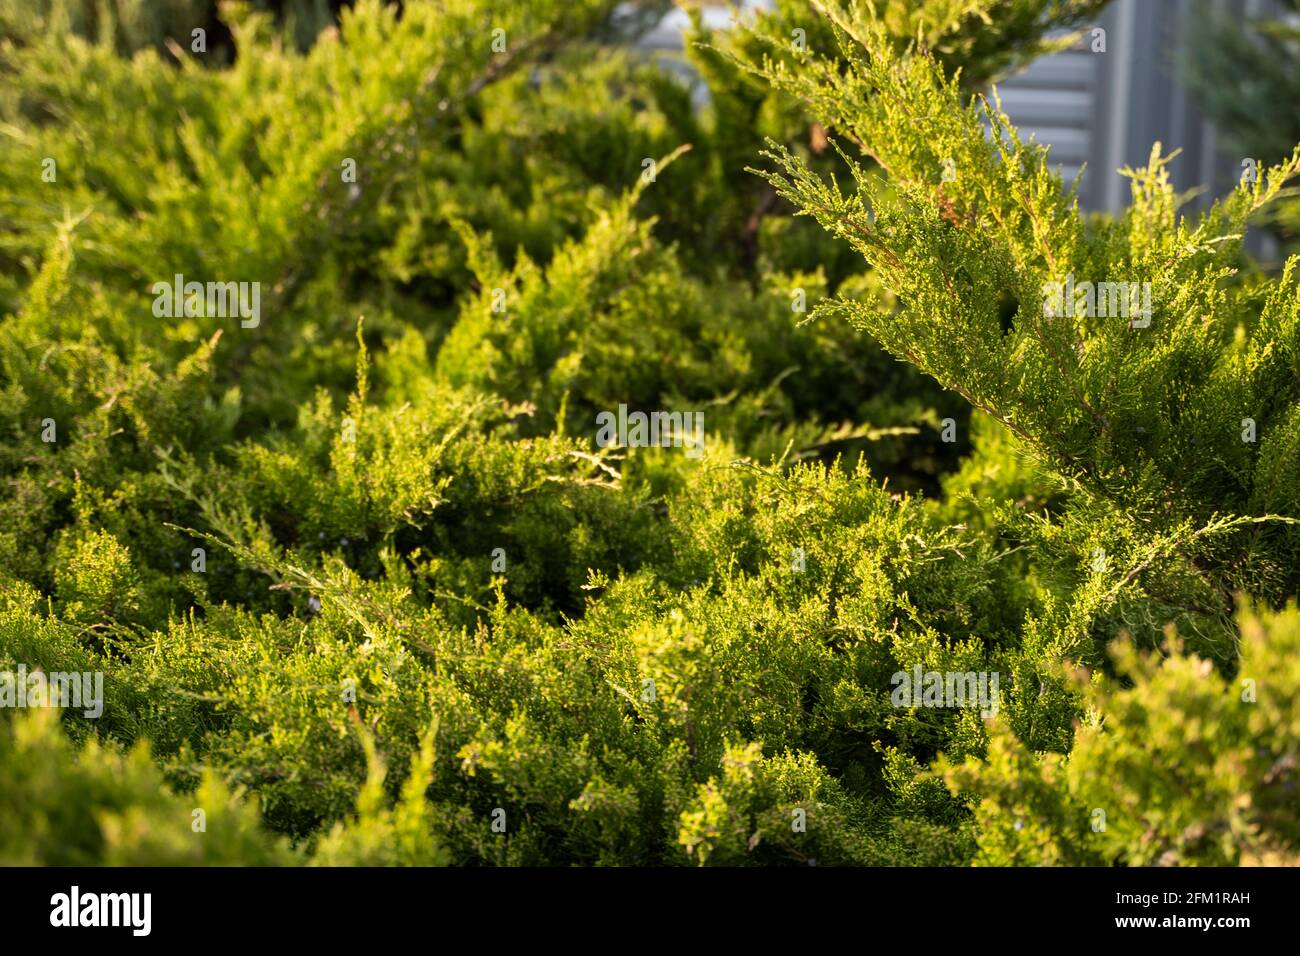 Green hedge of thuja trees. Closeup fresh green branches of thuja trees. Evergreen coniferous Tui tree. Nature, background. Stock Photo